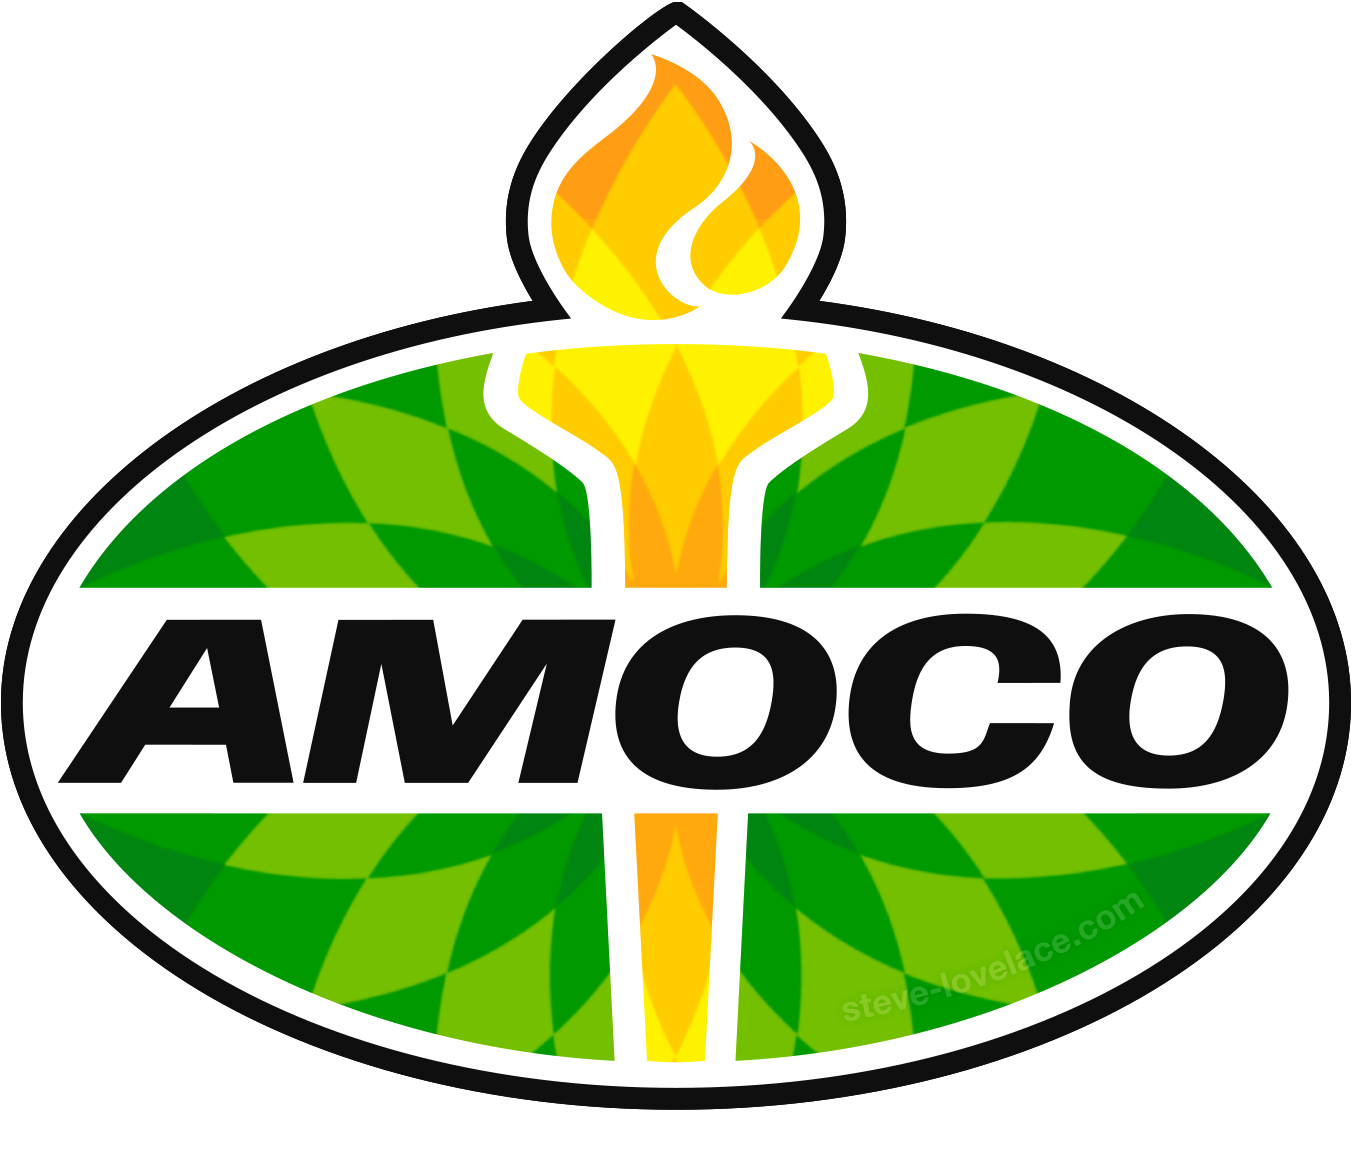 The Amoco Logo - Old Amoco Gas Station Sign (1800x1200)